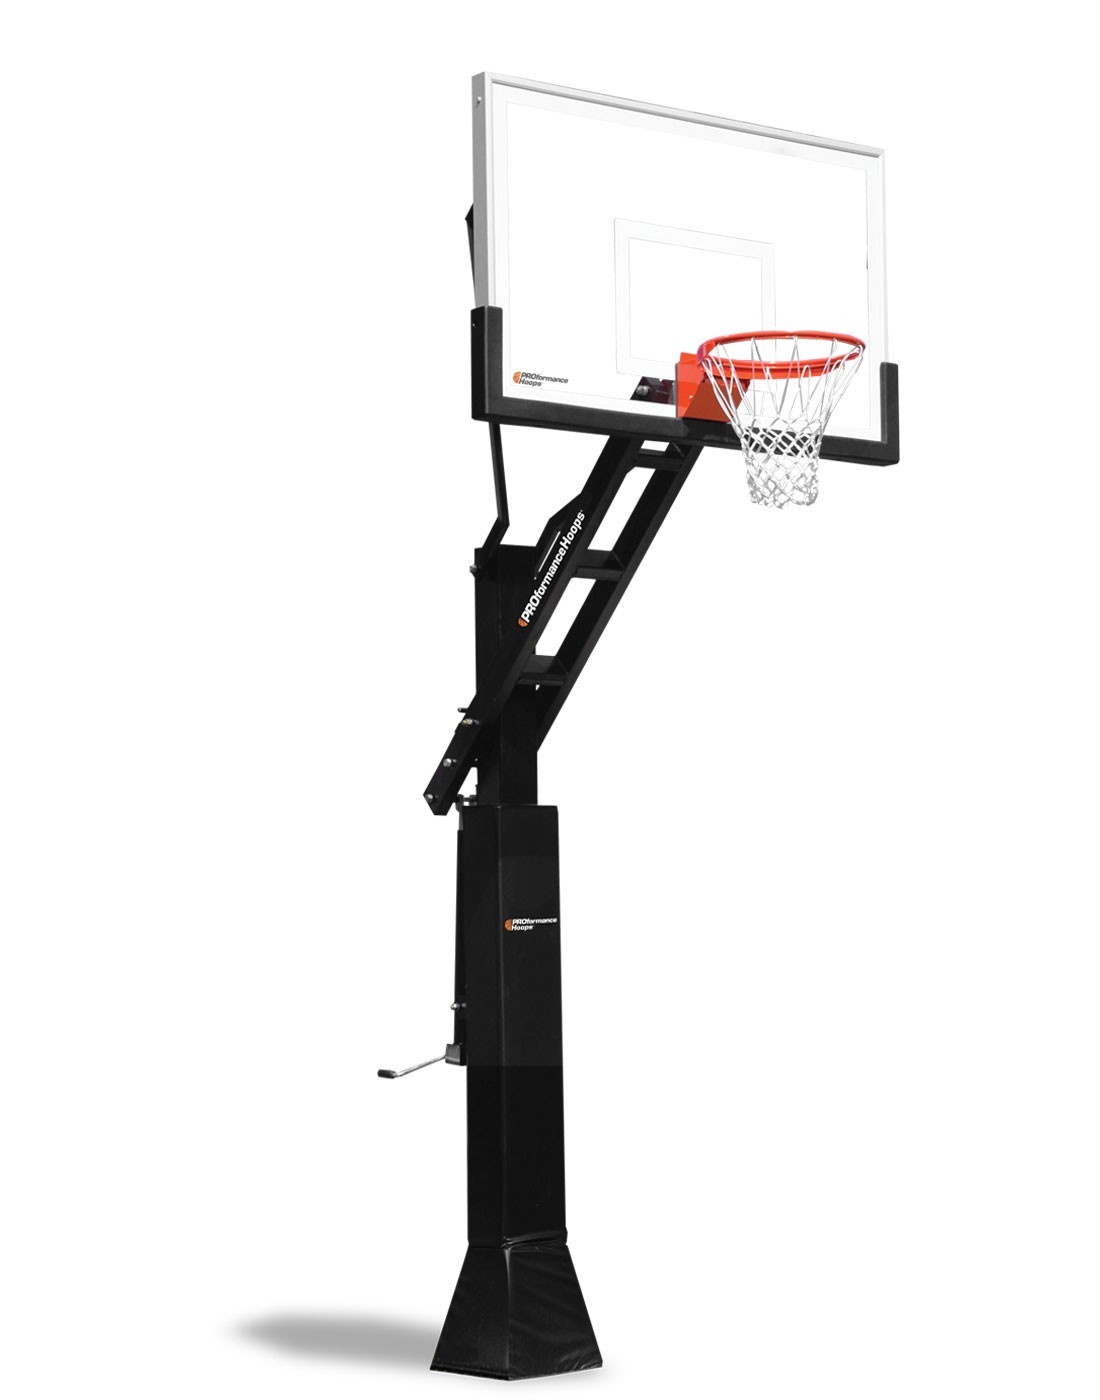 PROformance PROview 660 basketball hoop